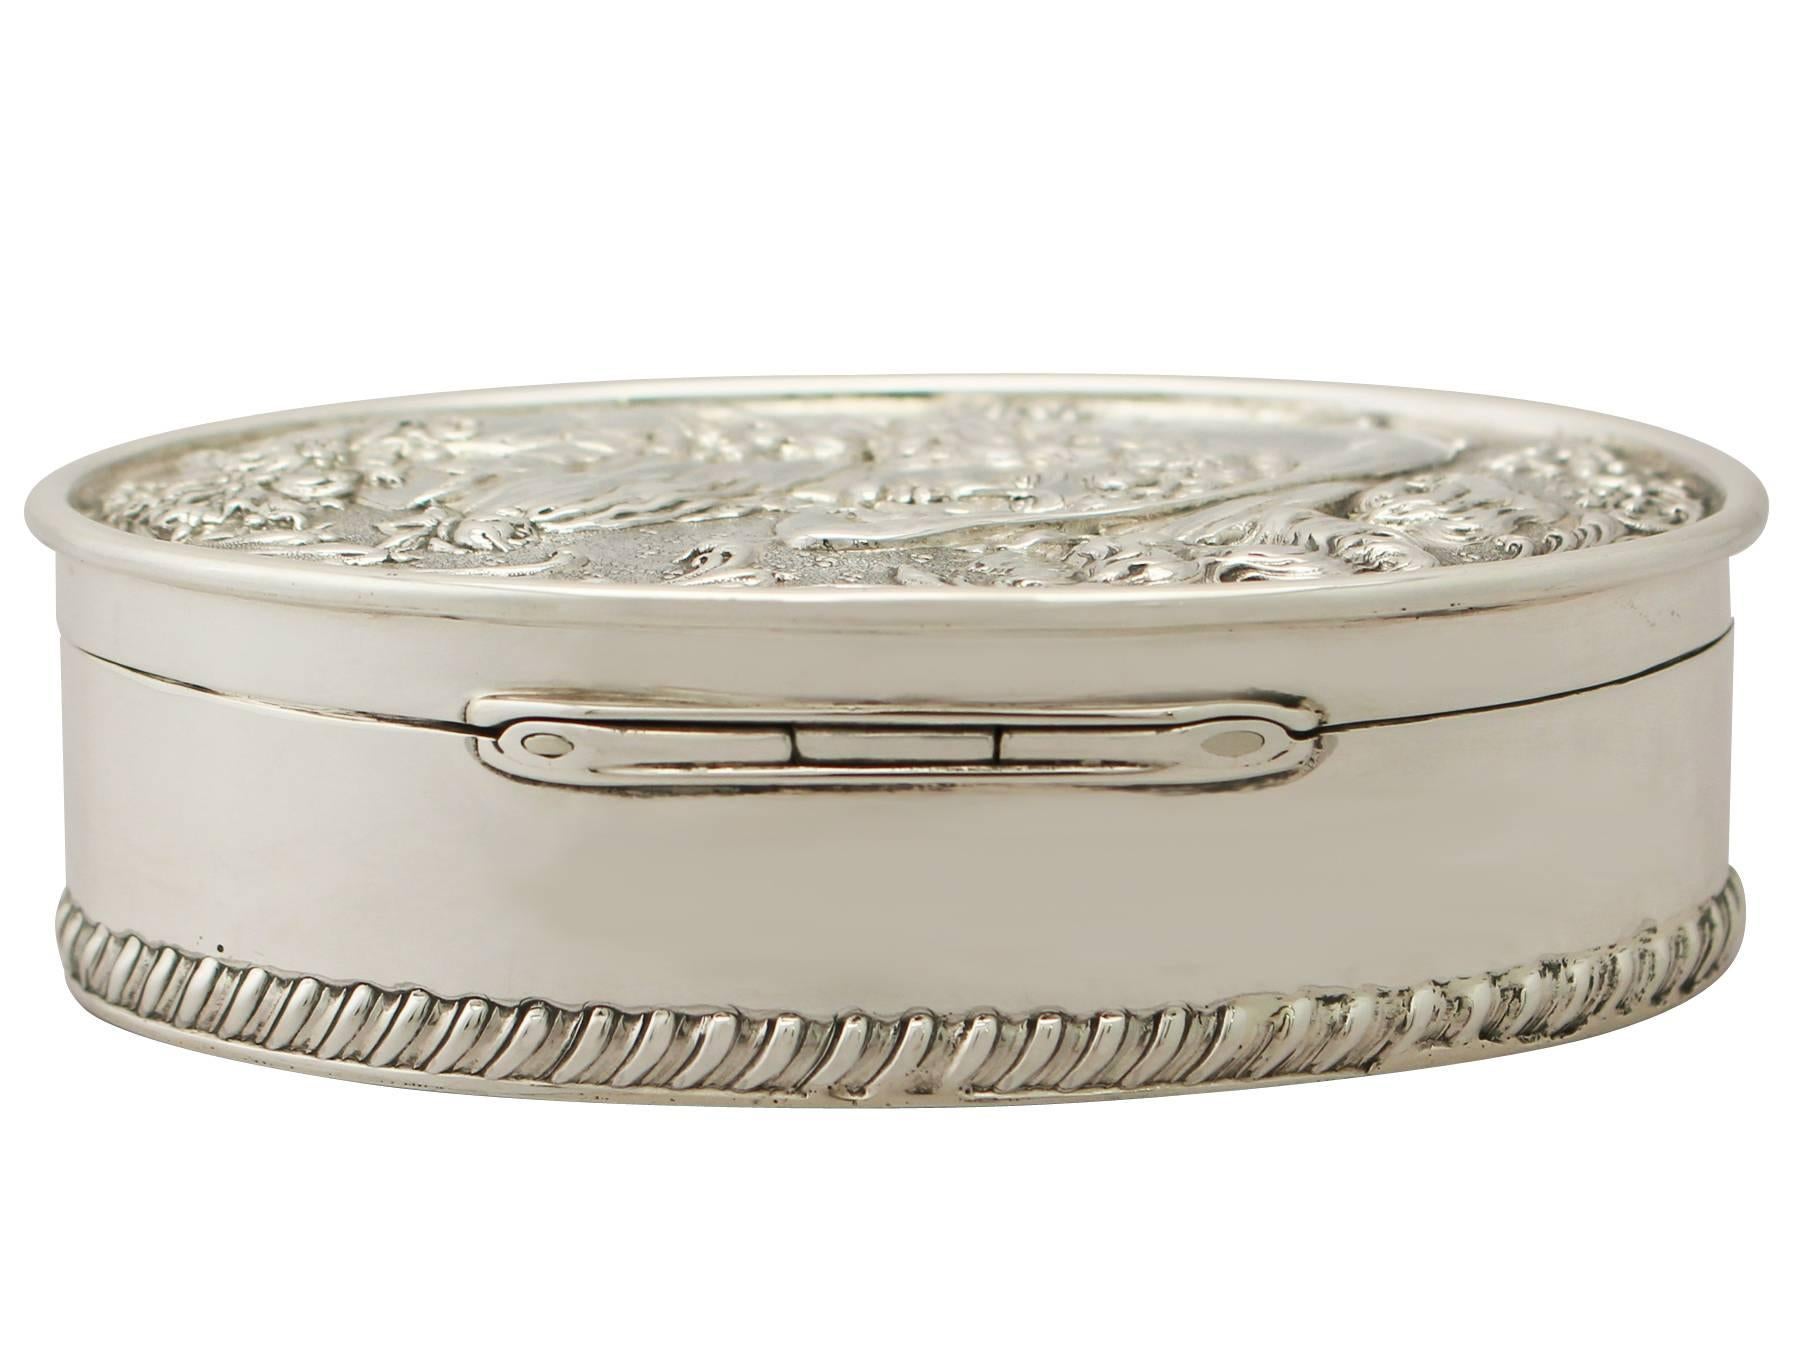 English Sterling Silver Jewelry/Trinket Box, Art Nouveau Style, Antique Edwardian